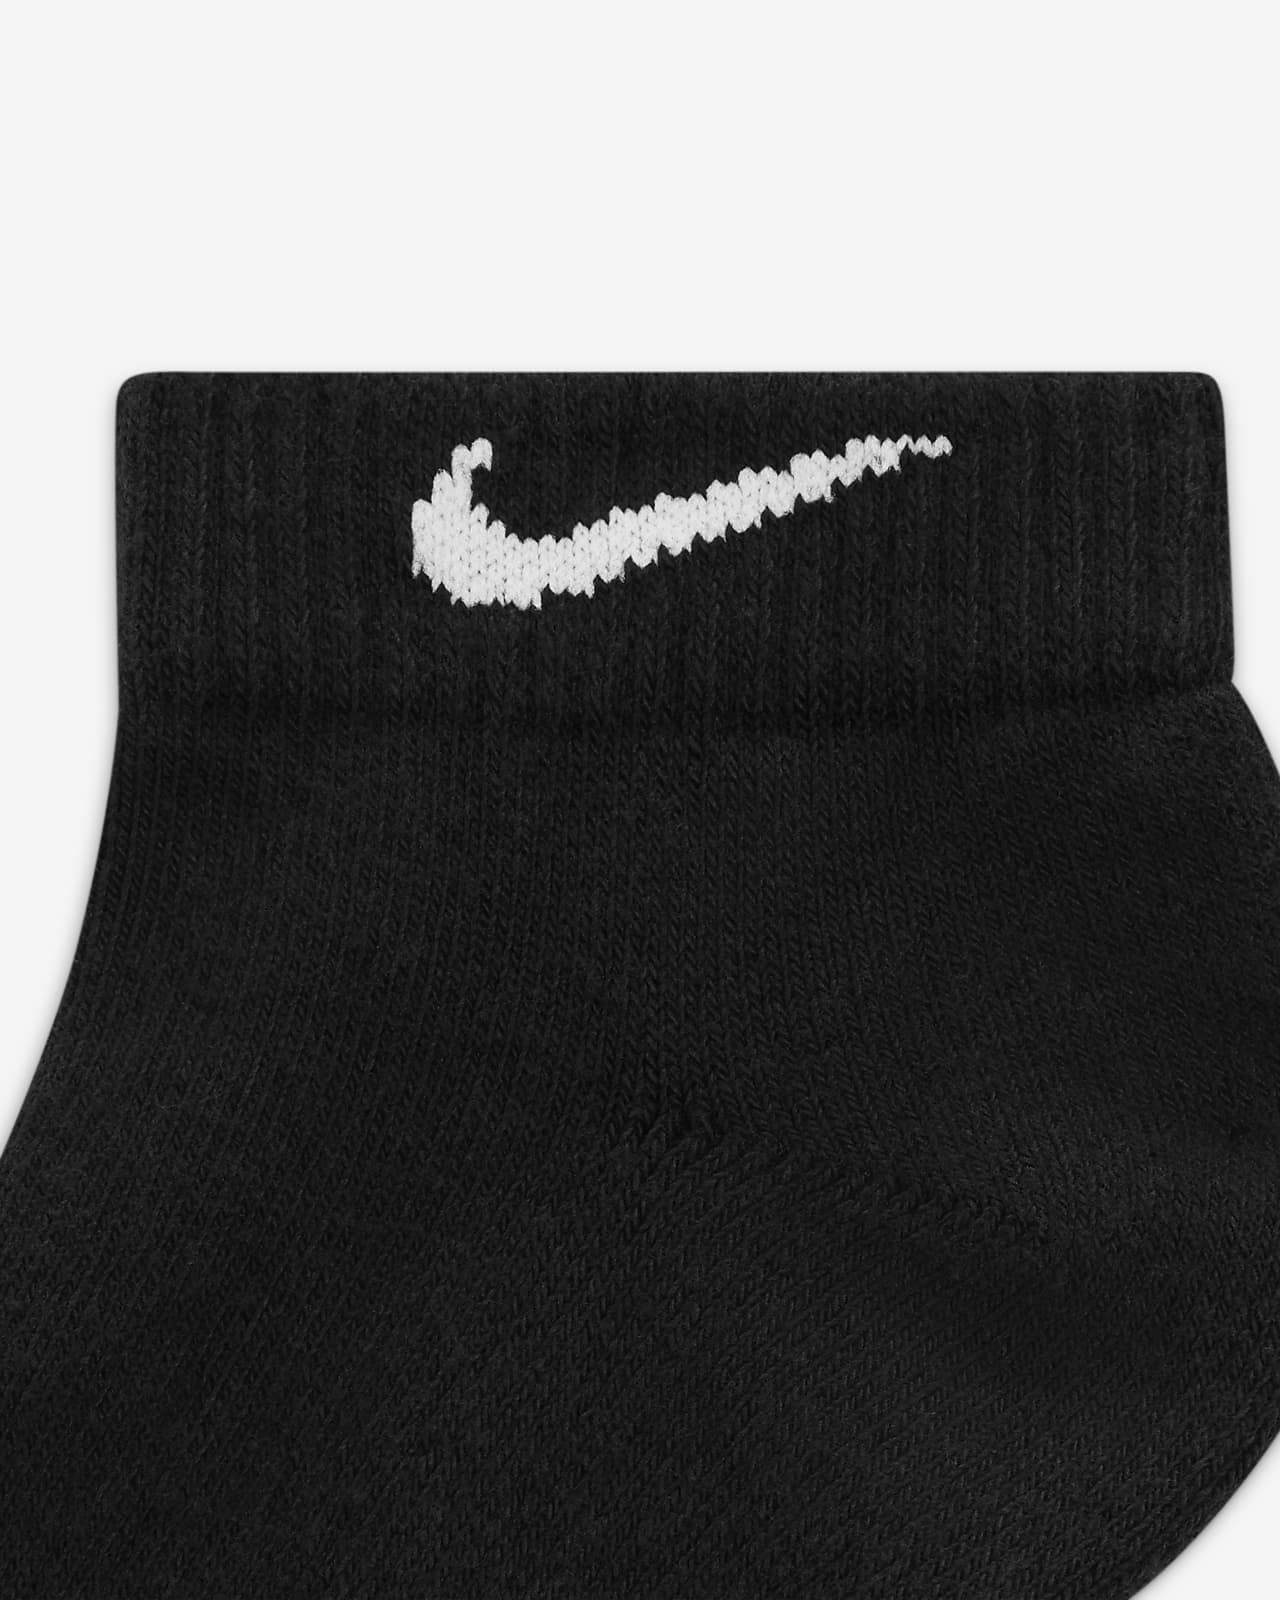 Nike Everyday Cushioned Training Low Socks (6 Pairs). Nike SG